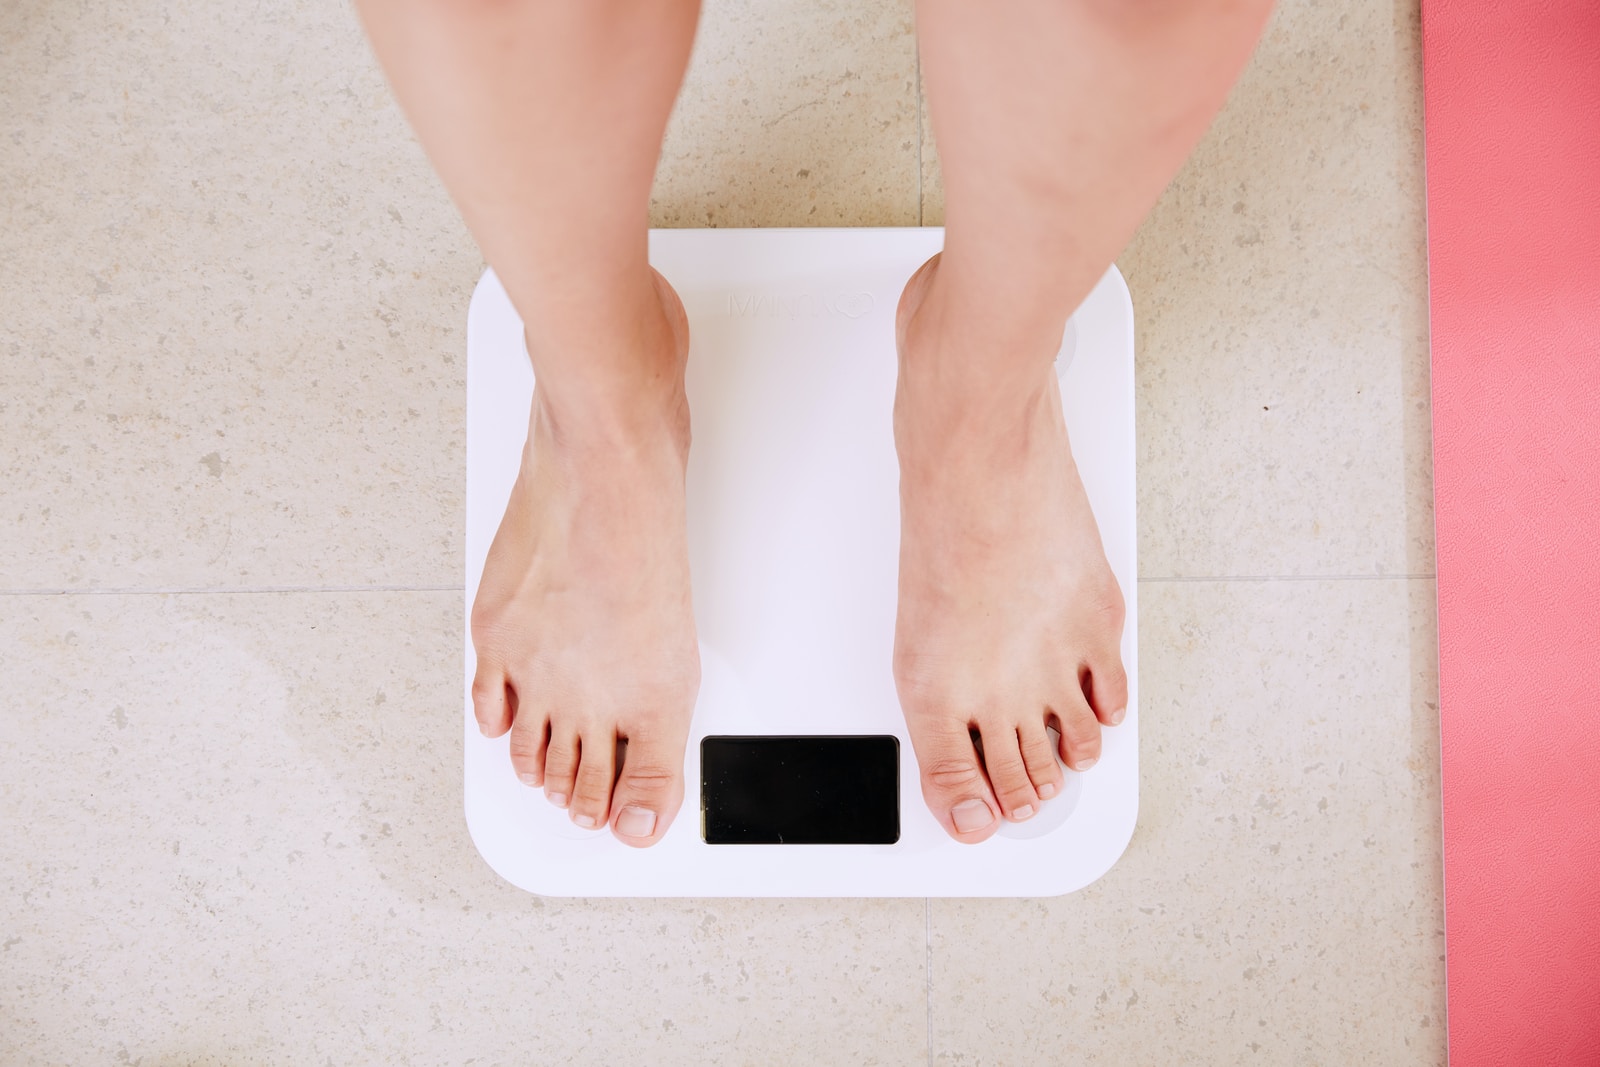 healthy eating habitsin Shape person standing on white digital bathroom scale